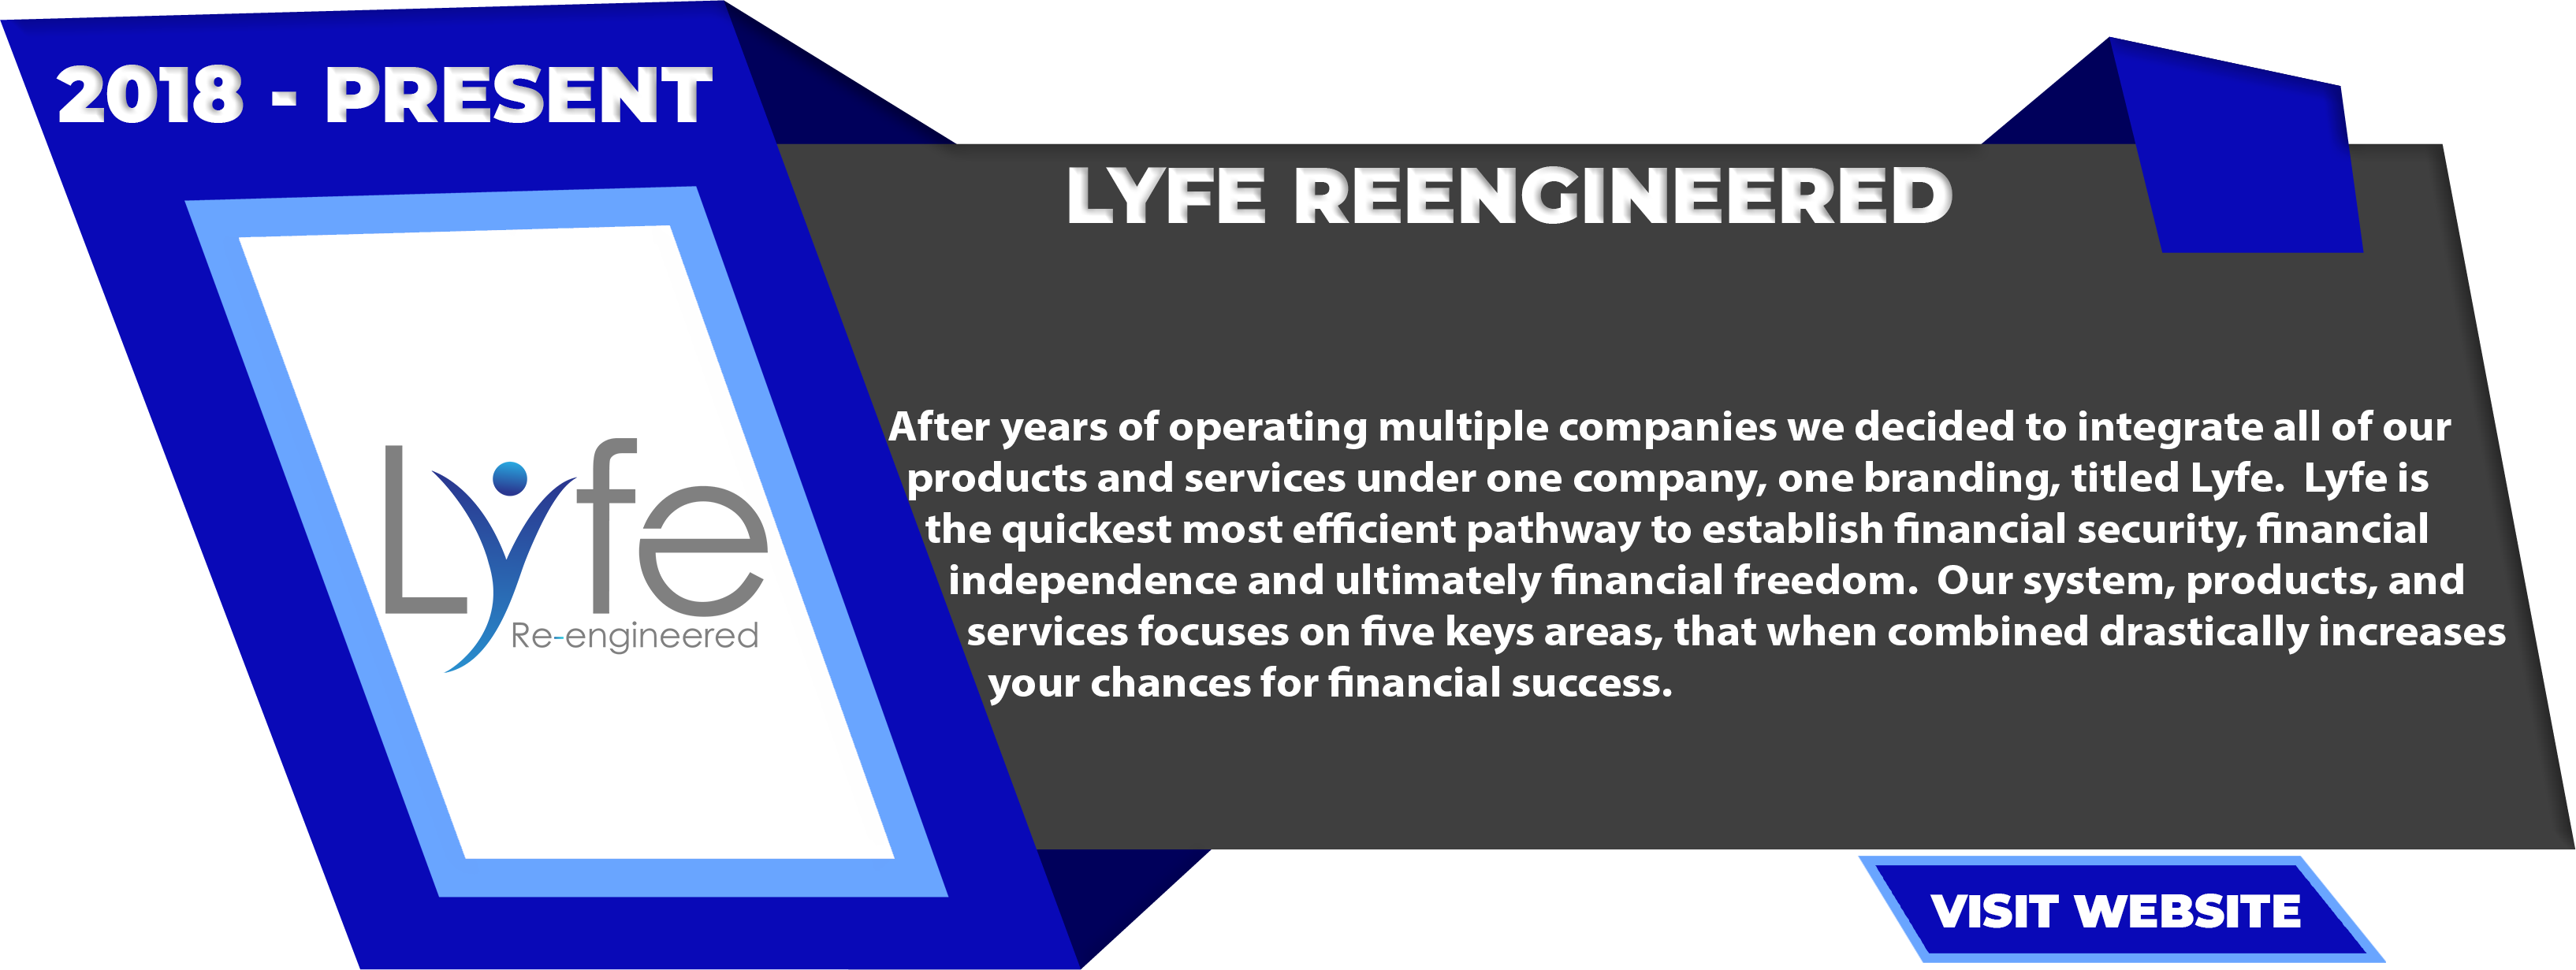 Lyfe-Reengineered-2018-1